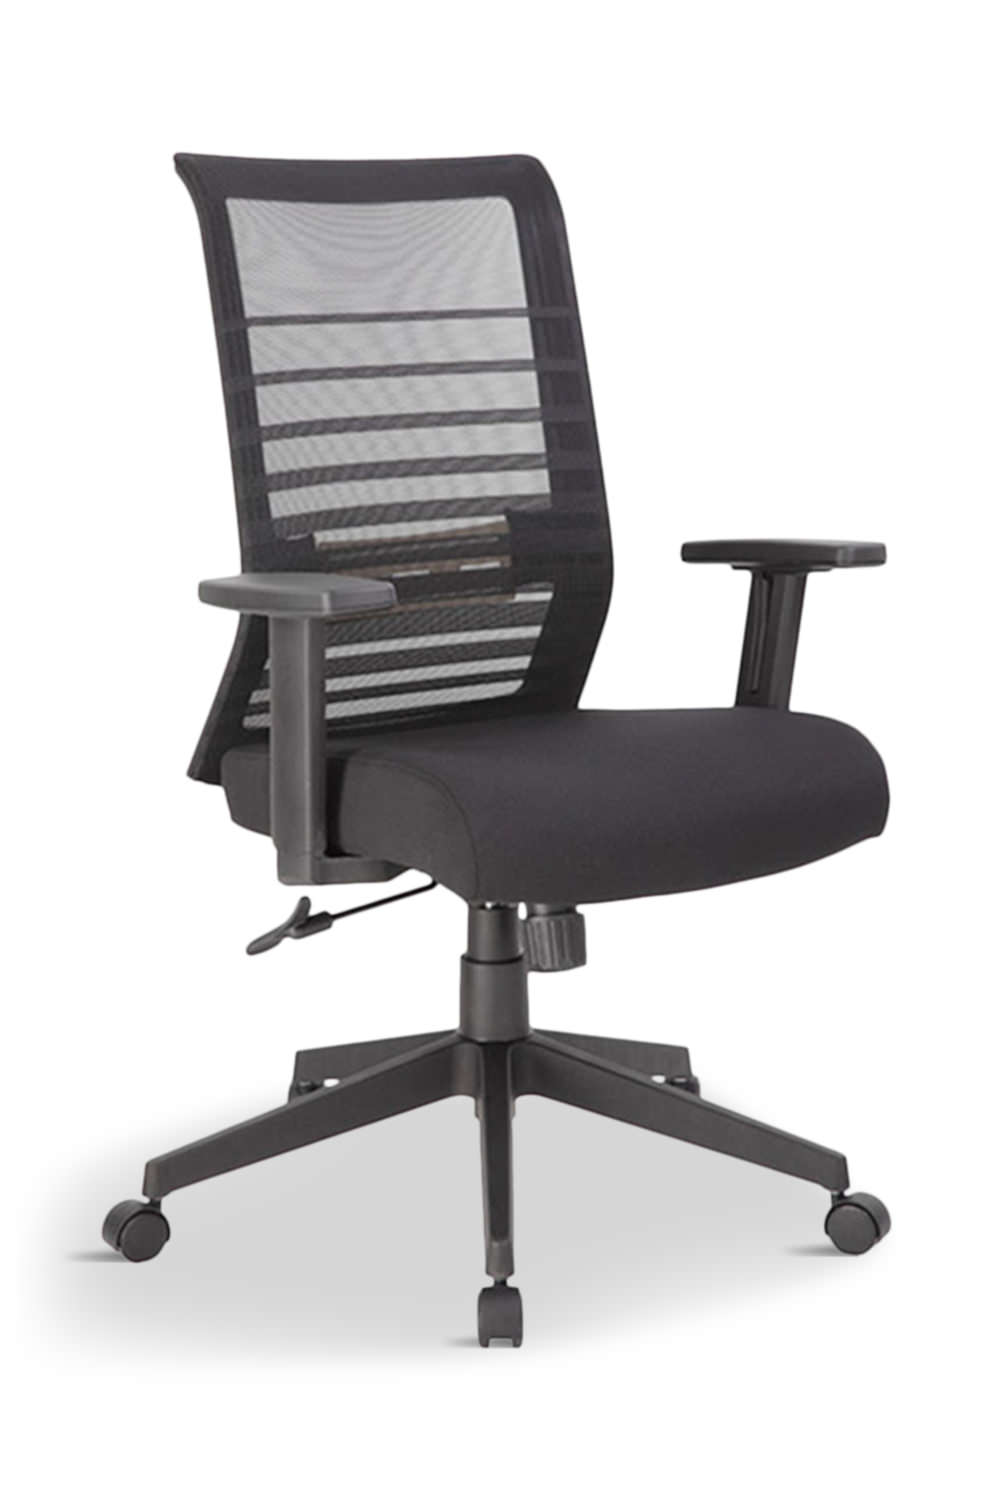 Modern Sleek Cushion Design Executive Black Office Chair - Bed